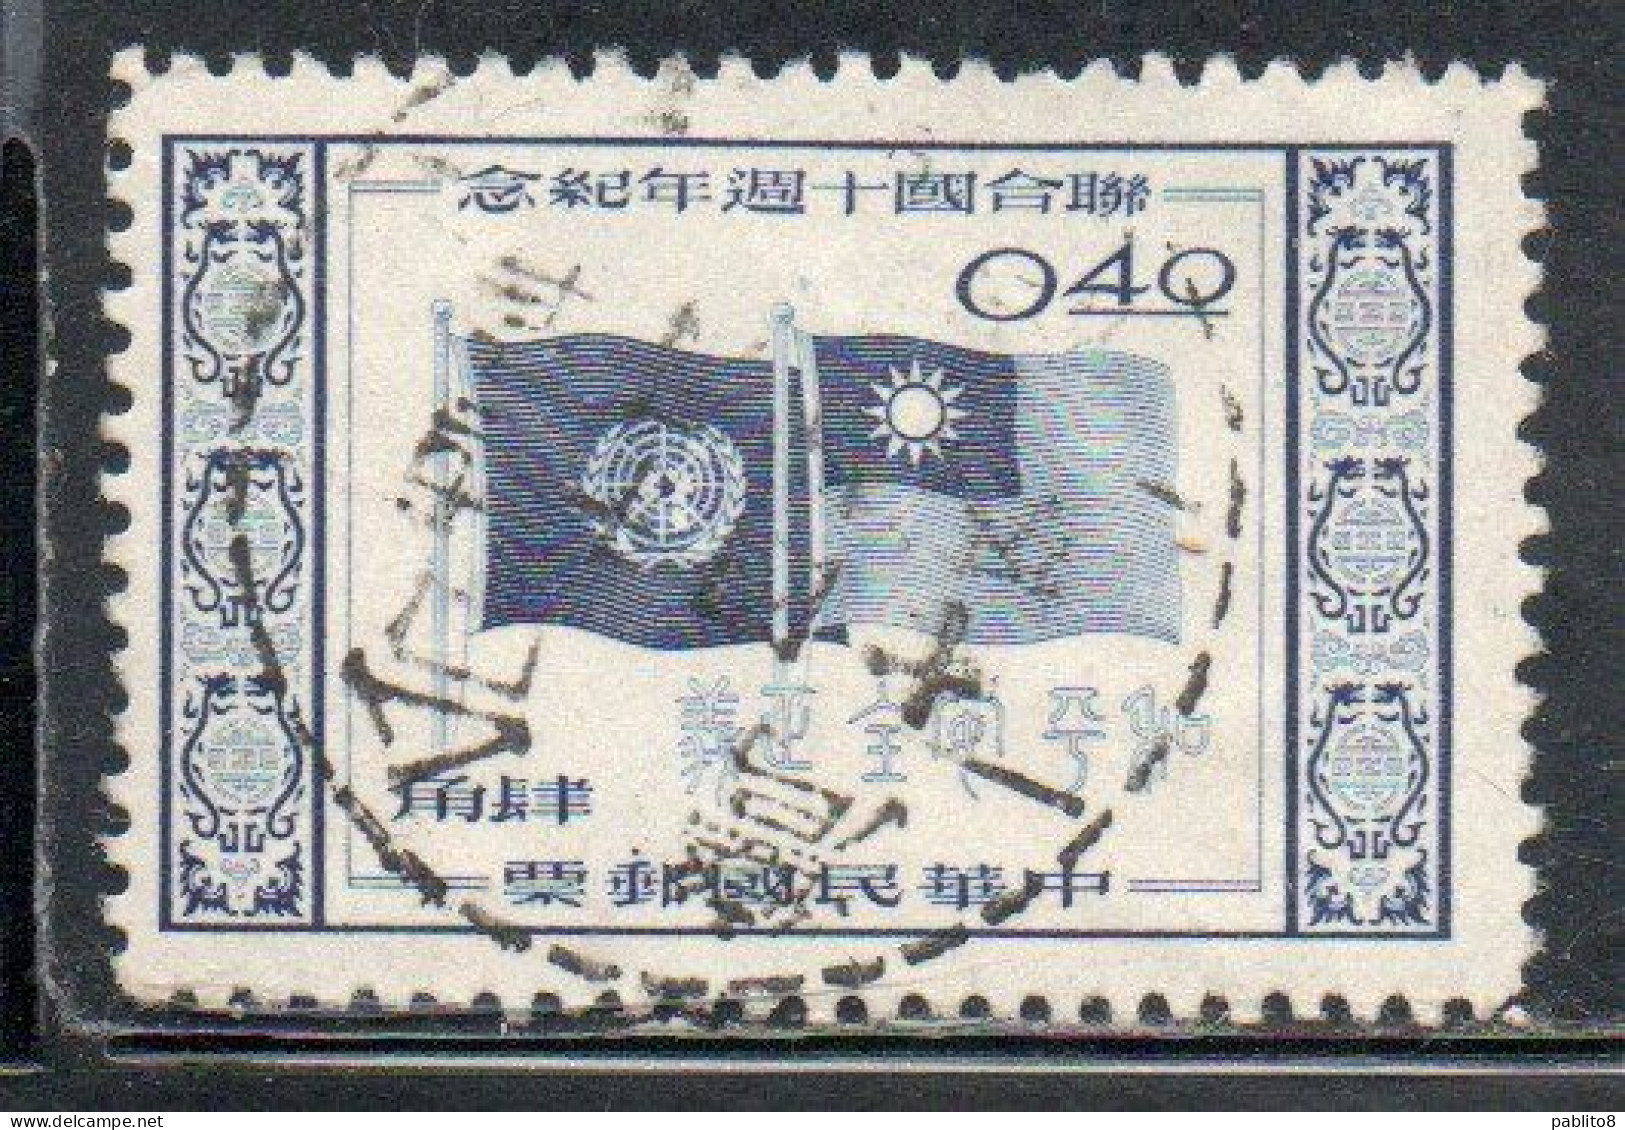 CHINA REPUBLIC CINA TAIWAN FORMOSA 1955 UN ONU ANNIVERSARY FLAGS 40c USED USATO OBLITERE' - Usados